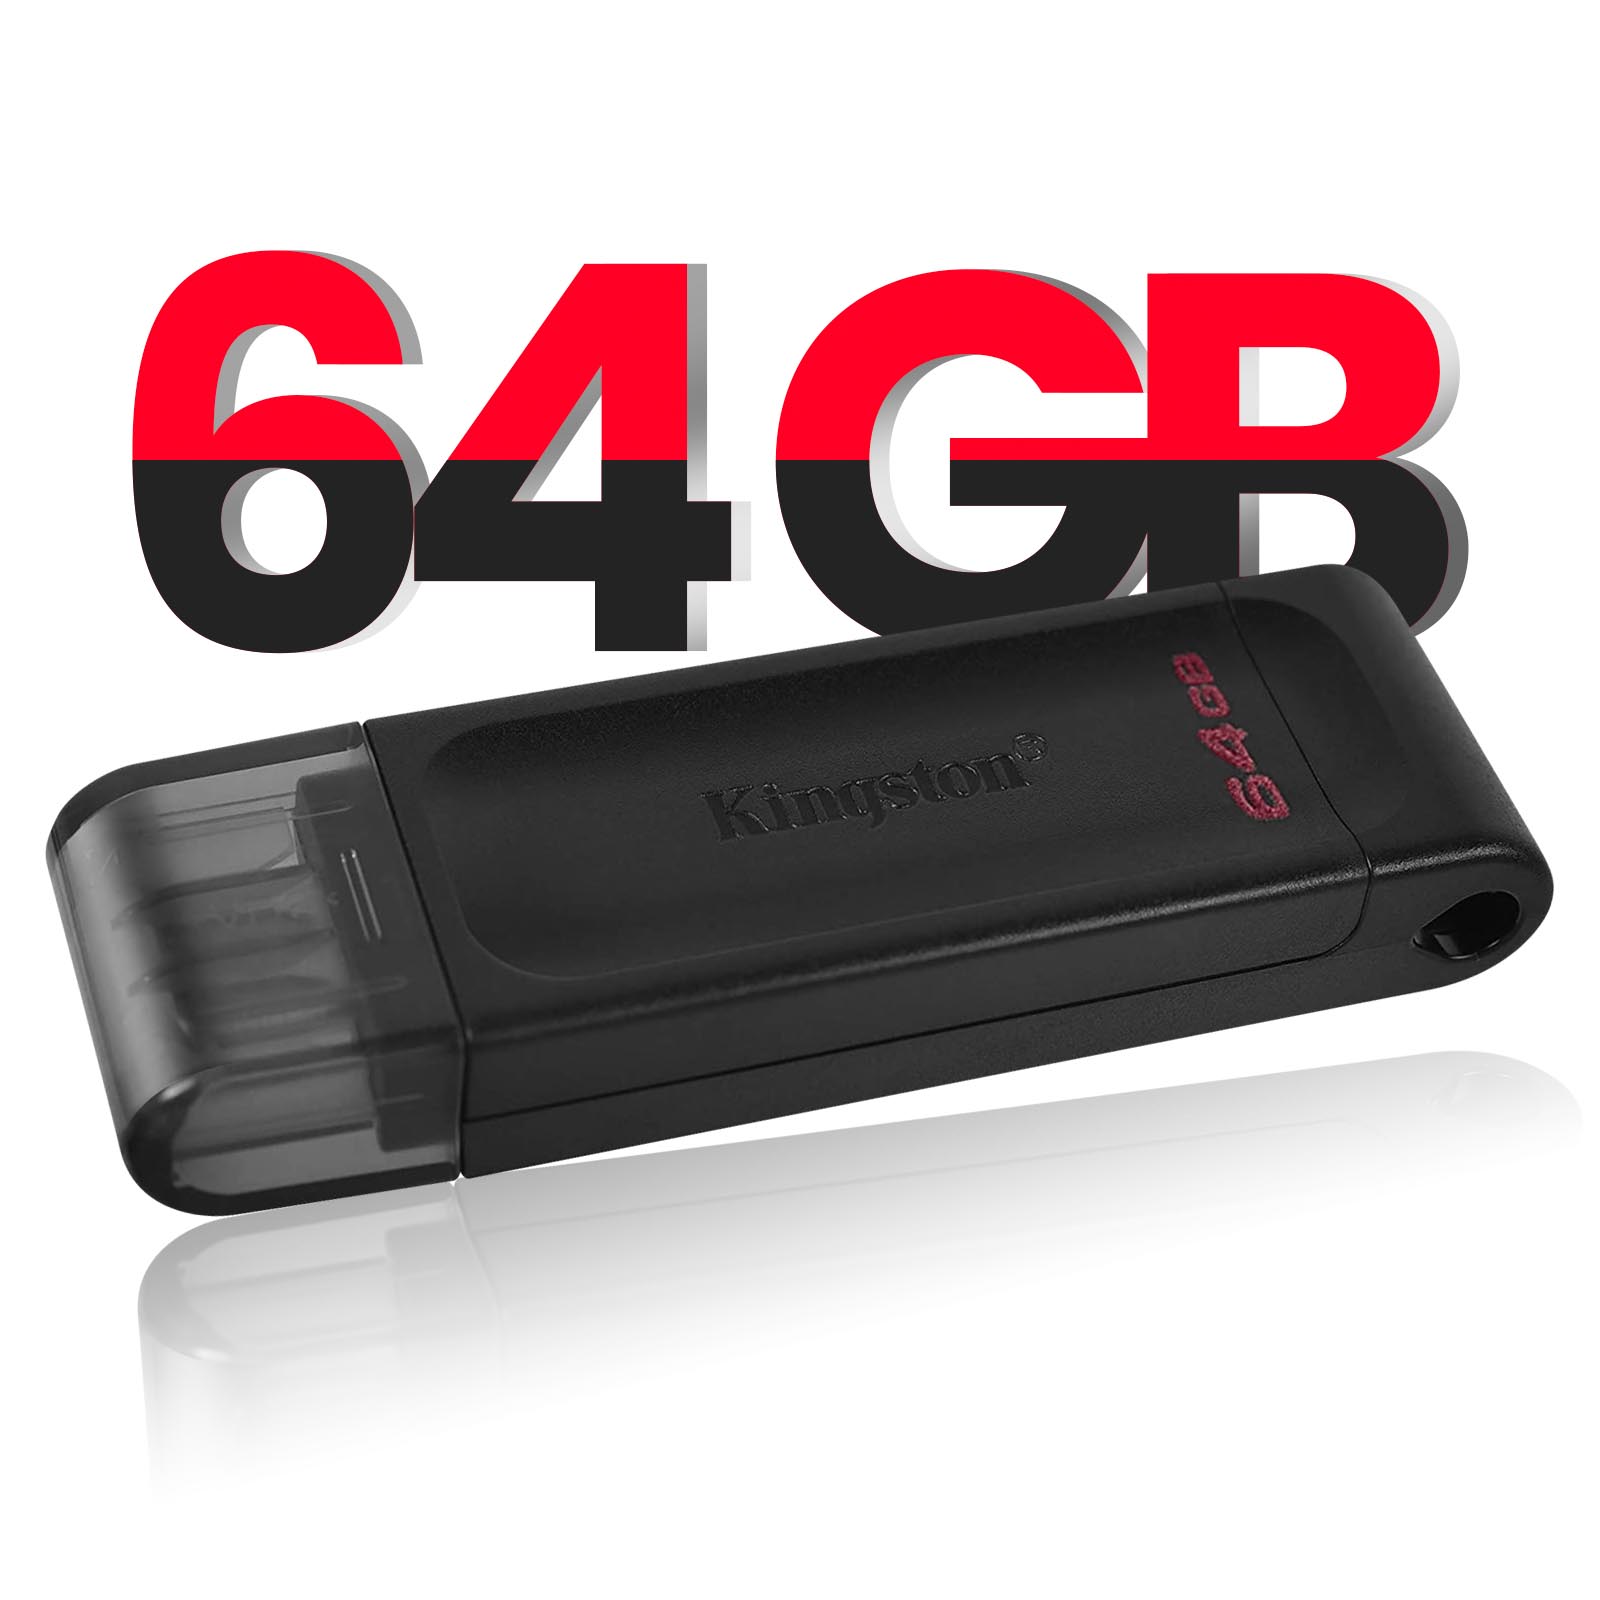 Clé USB Kingston 64GB